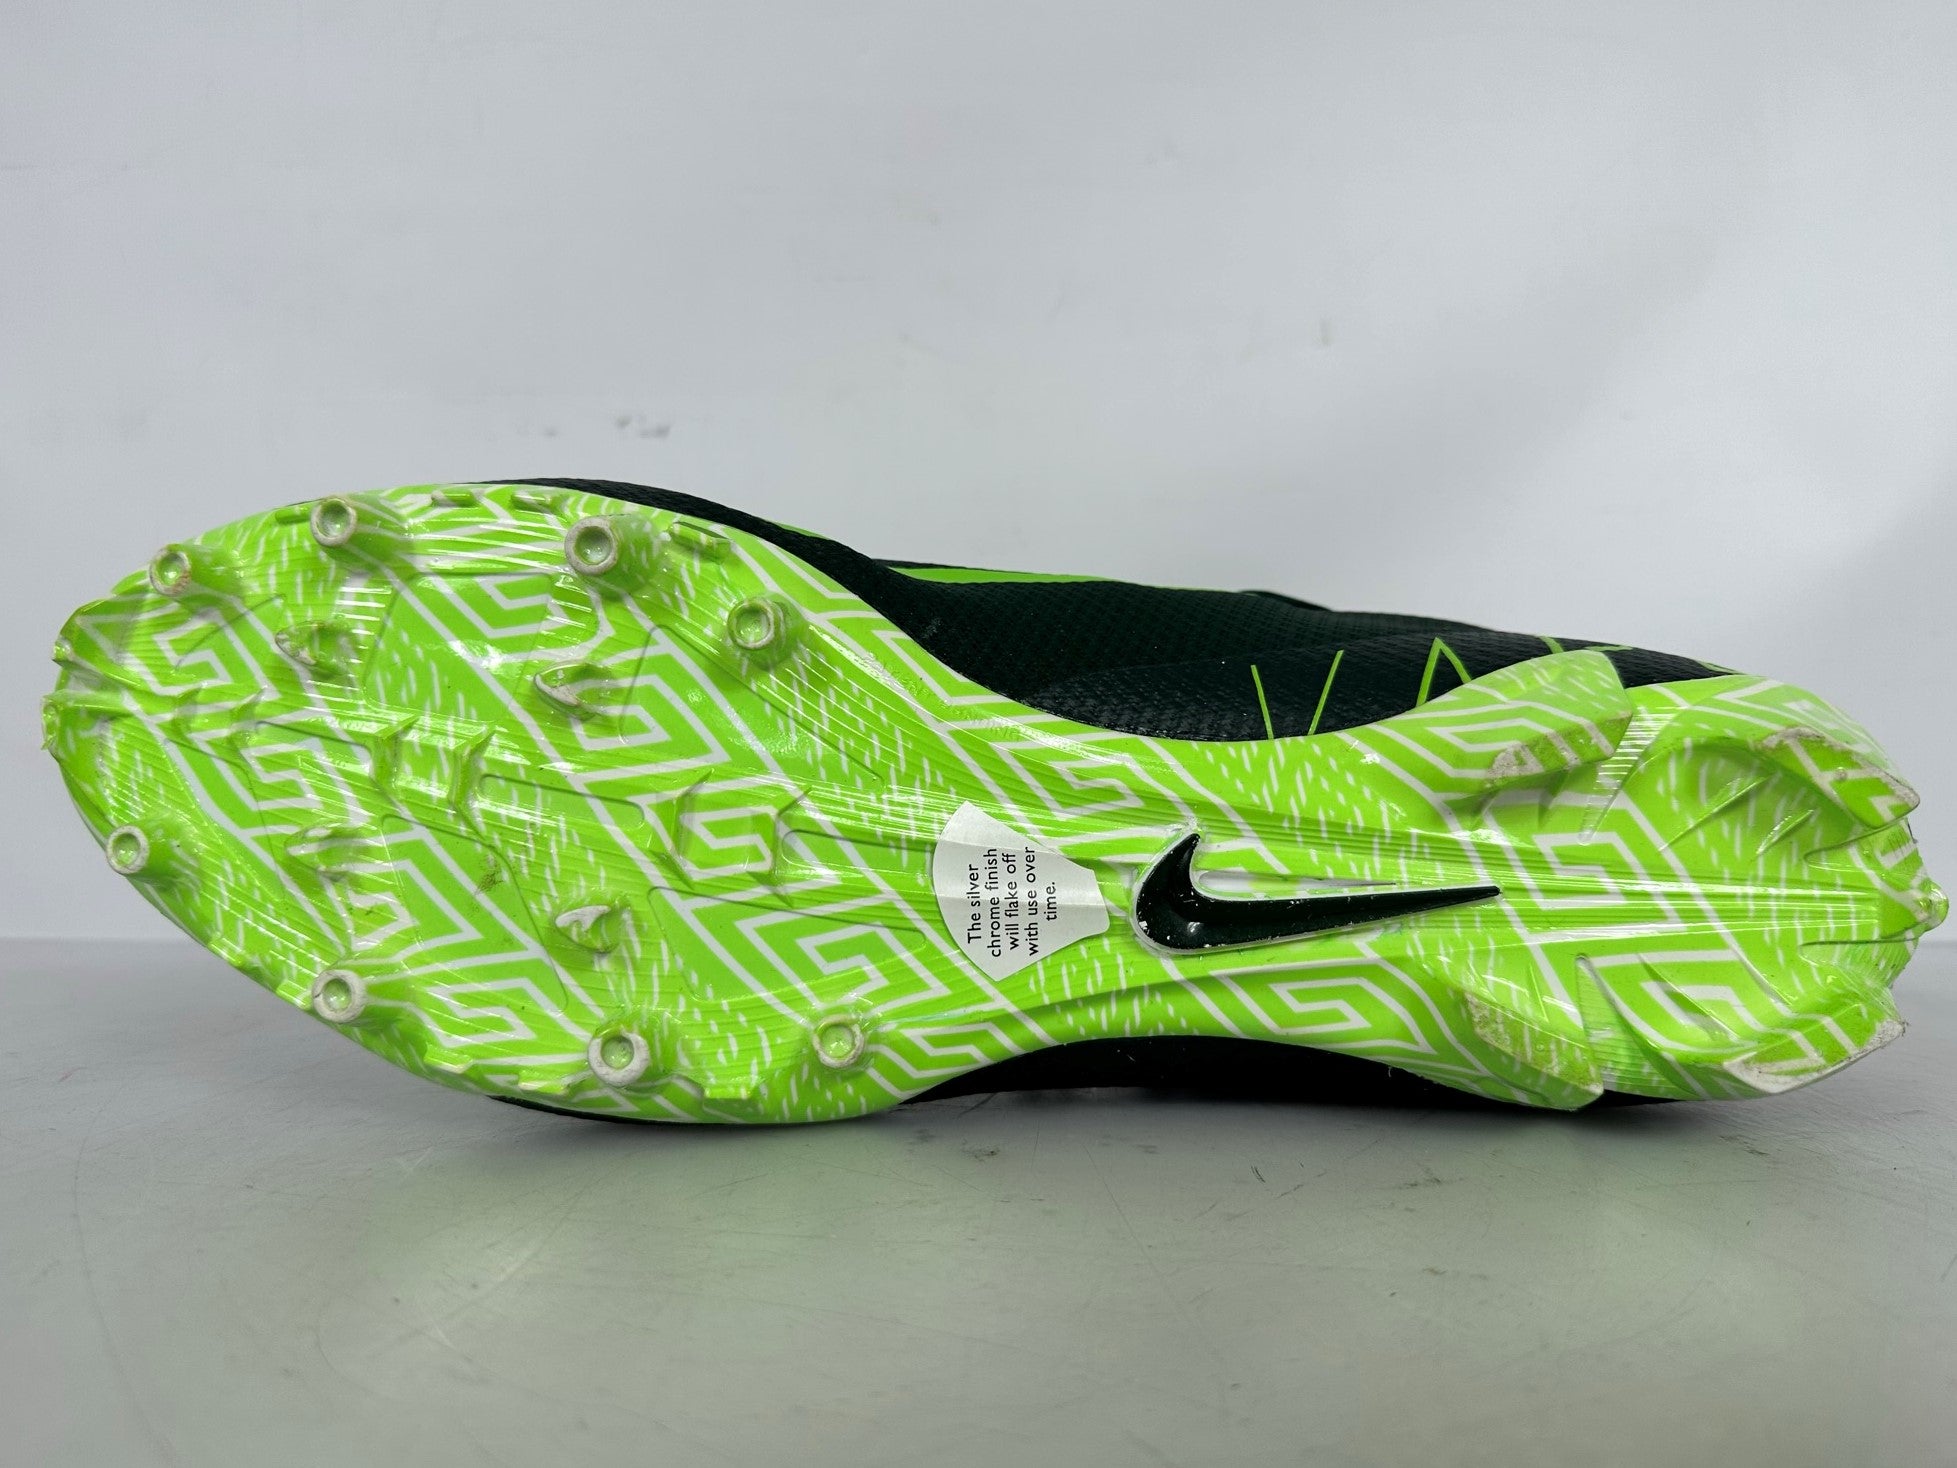 Nike Dark Green Vapor Untouchable Speed 3 TD SMU P Football Cleats Men's Size 16 *Used - Like New w/ Box*